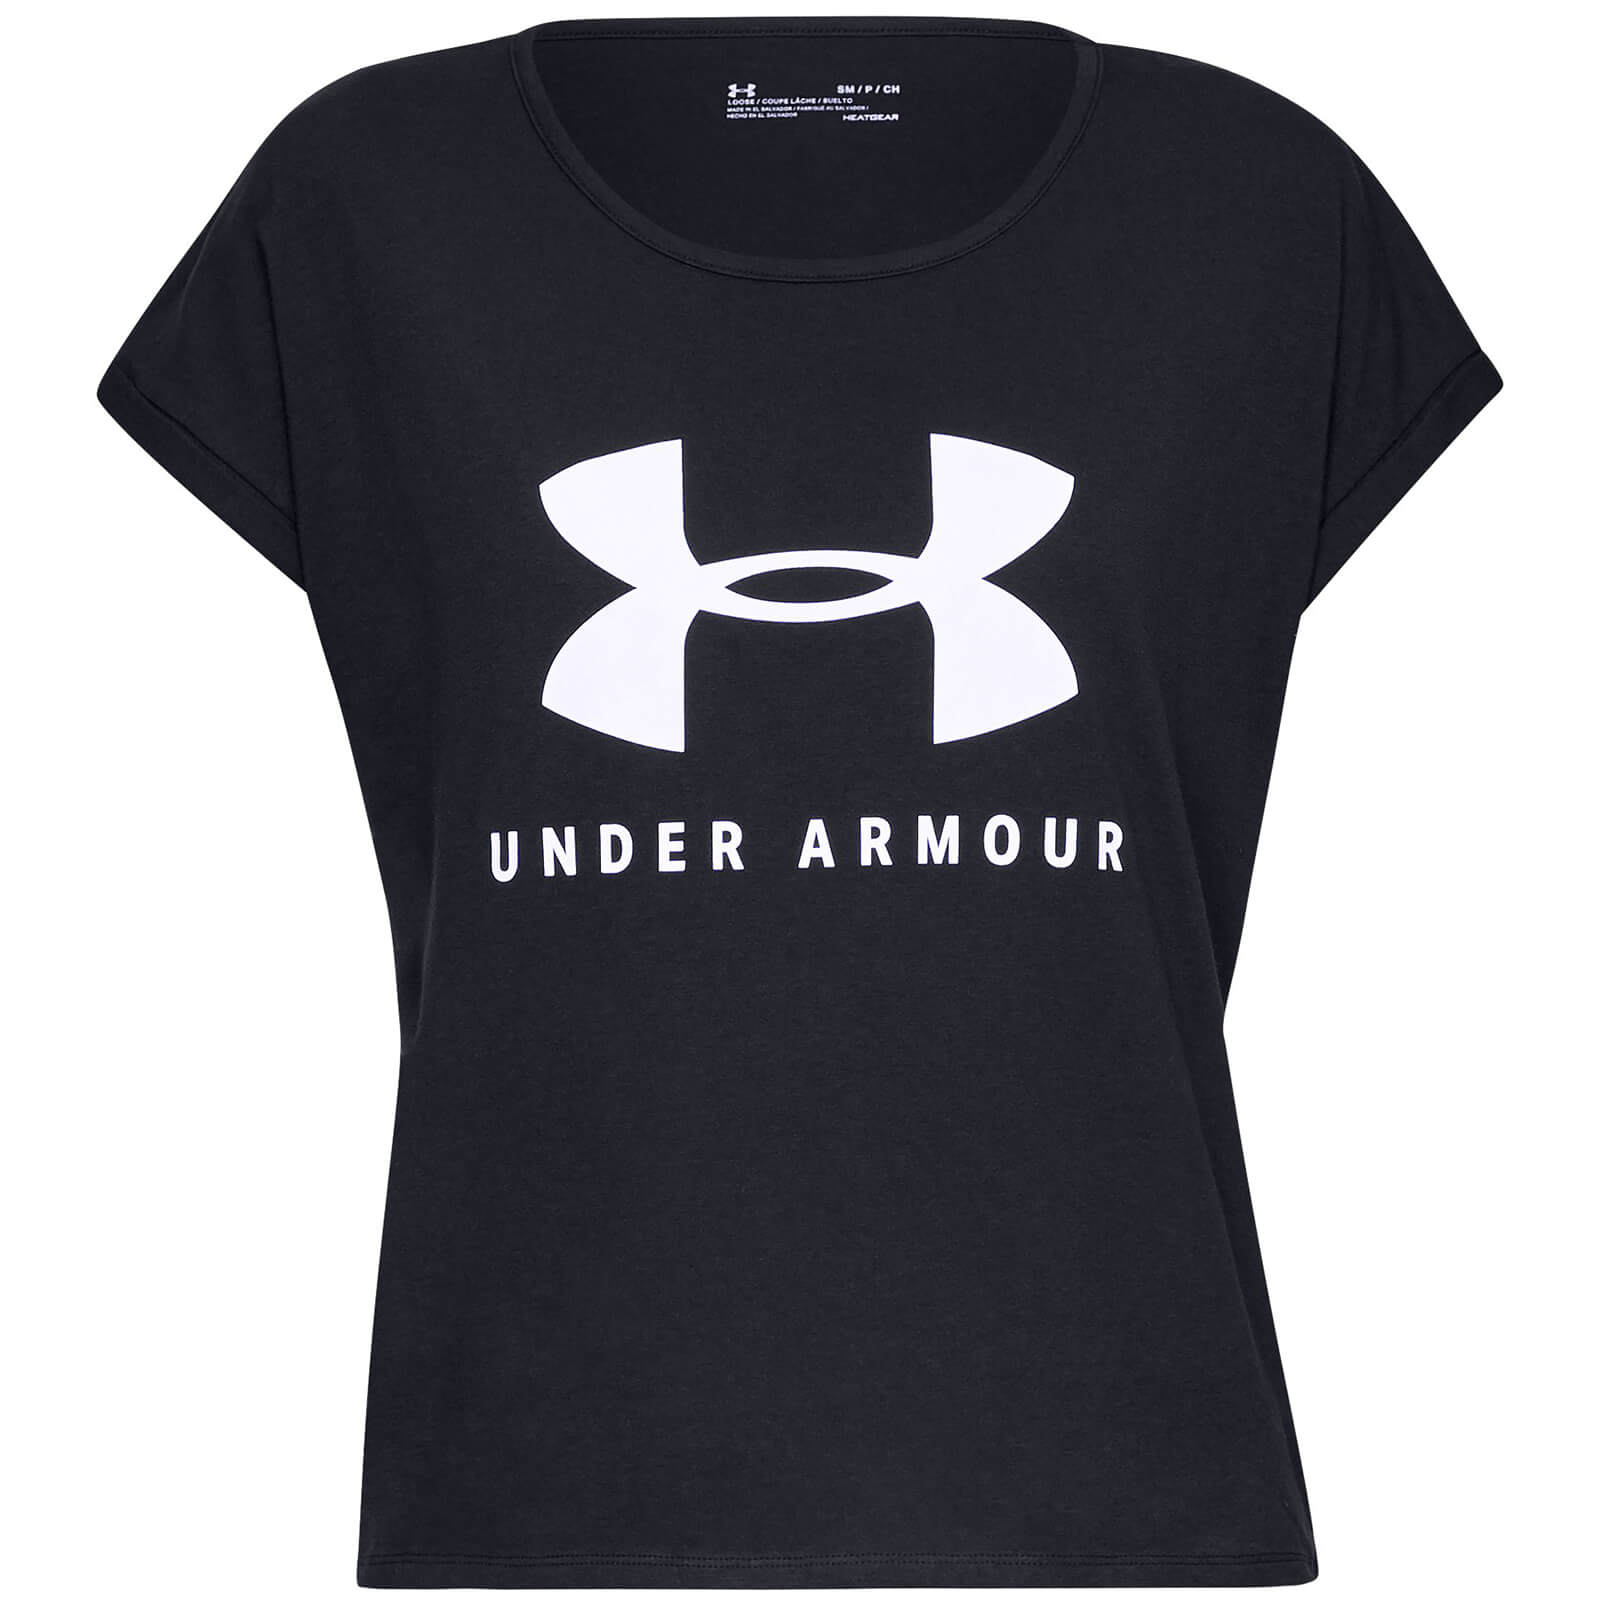 under armour tshirt women